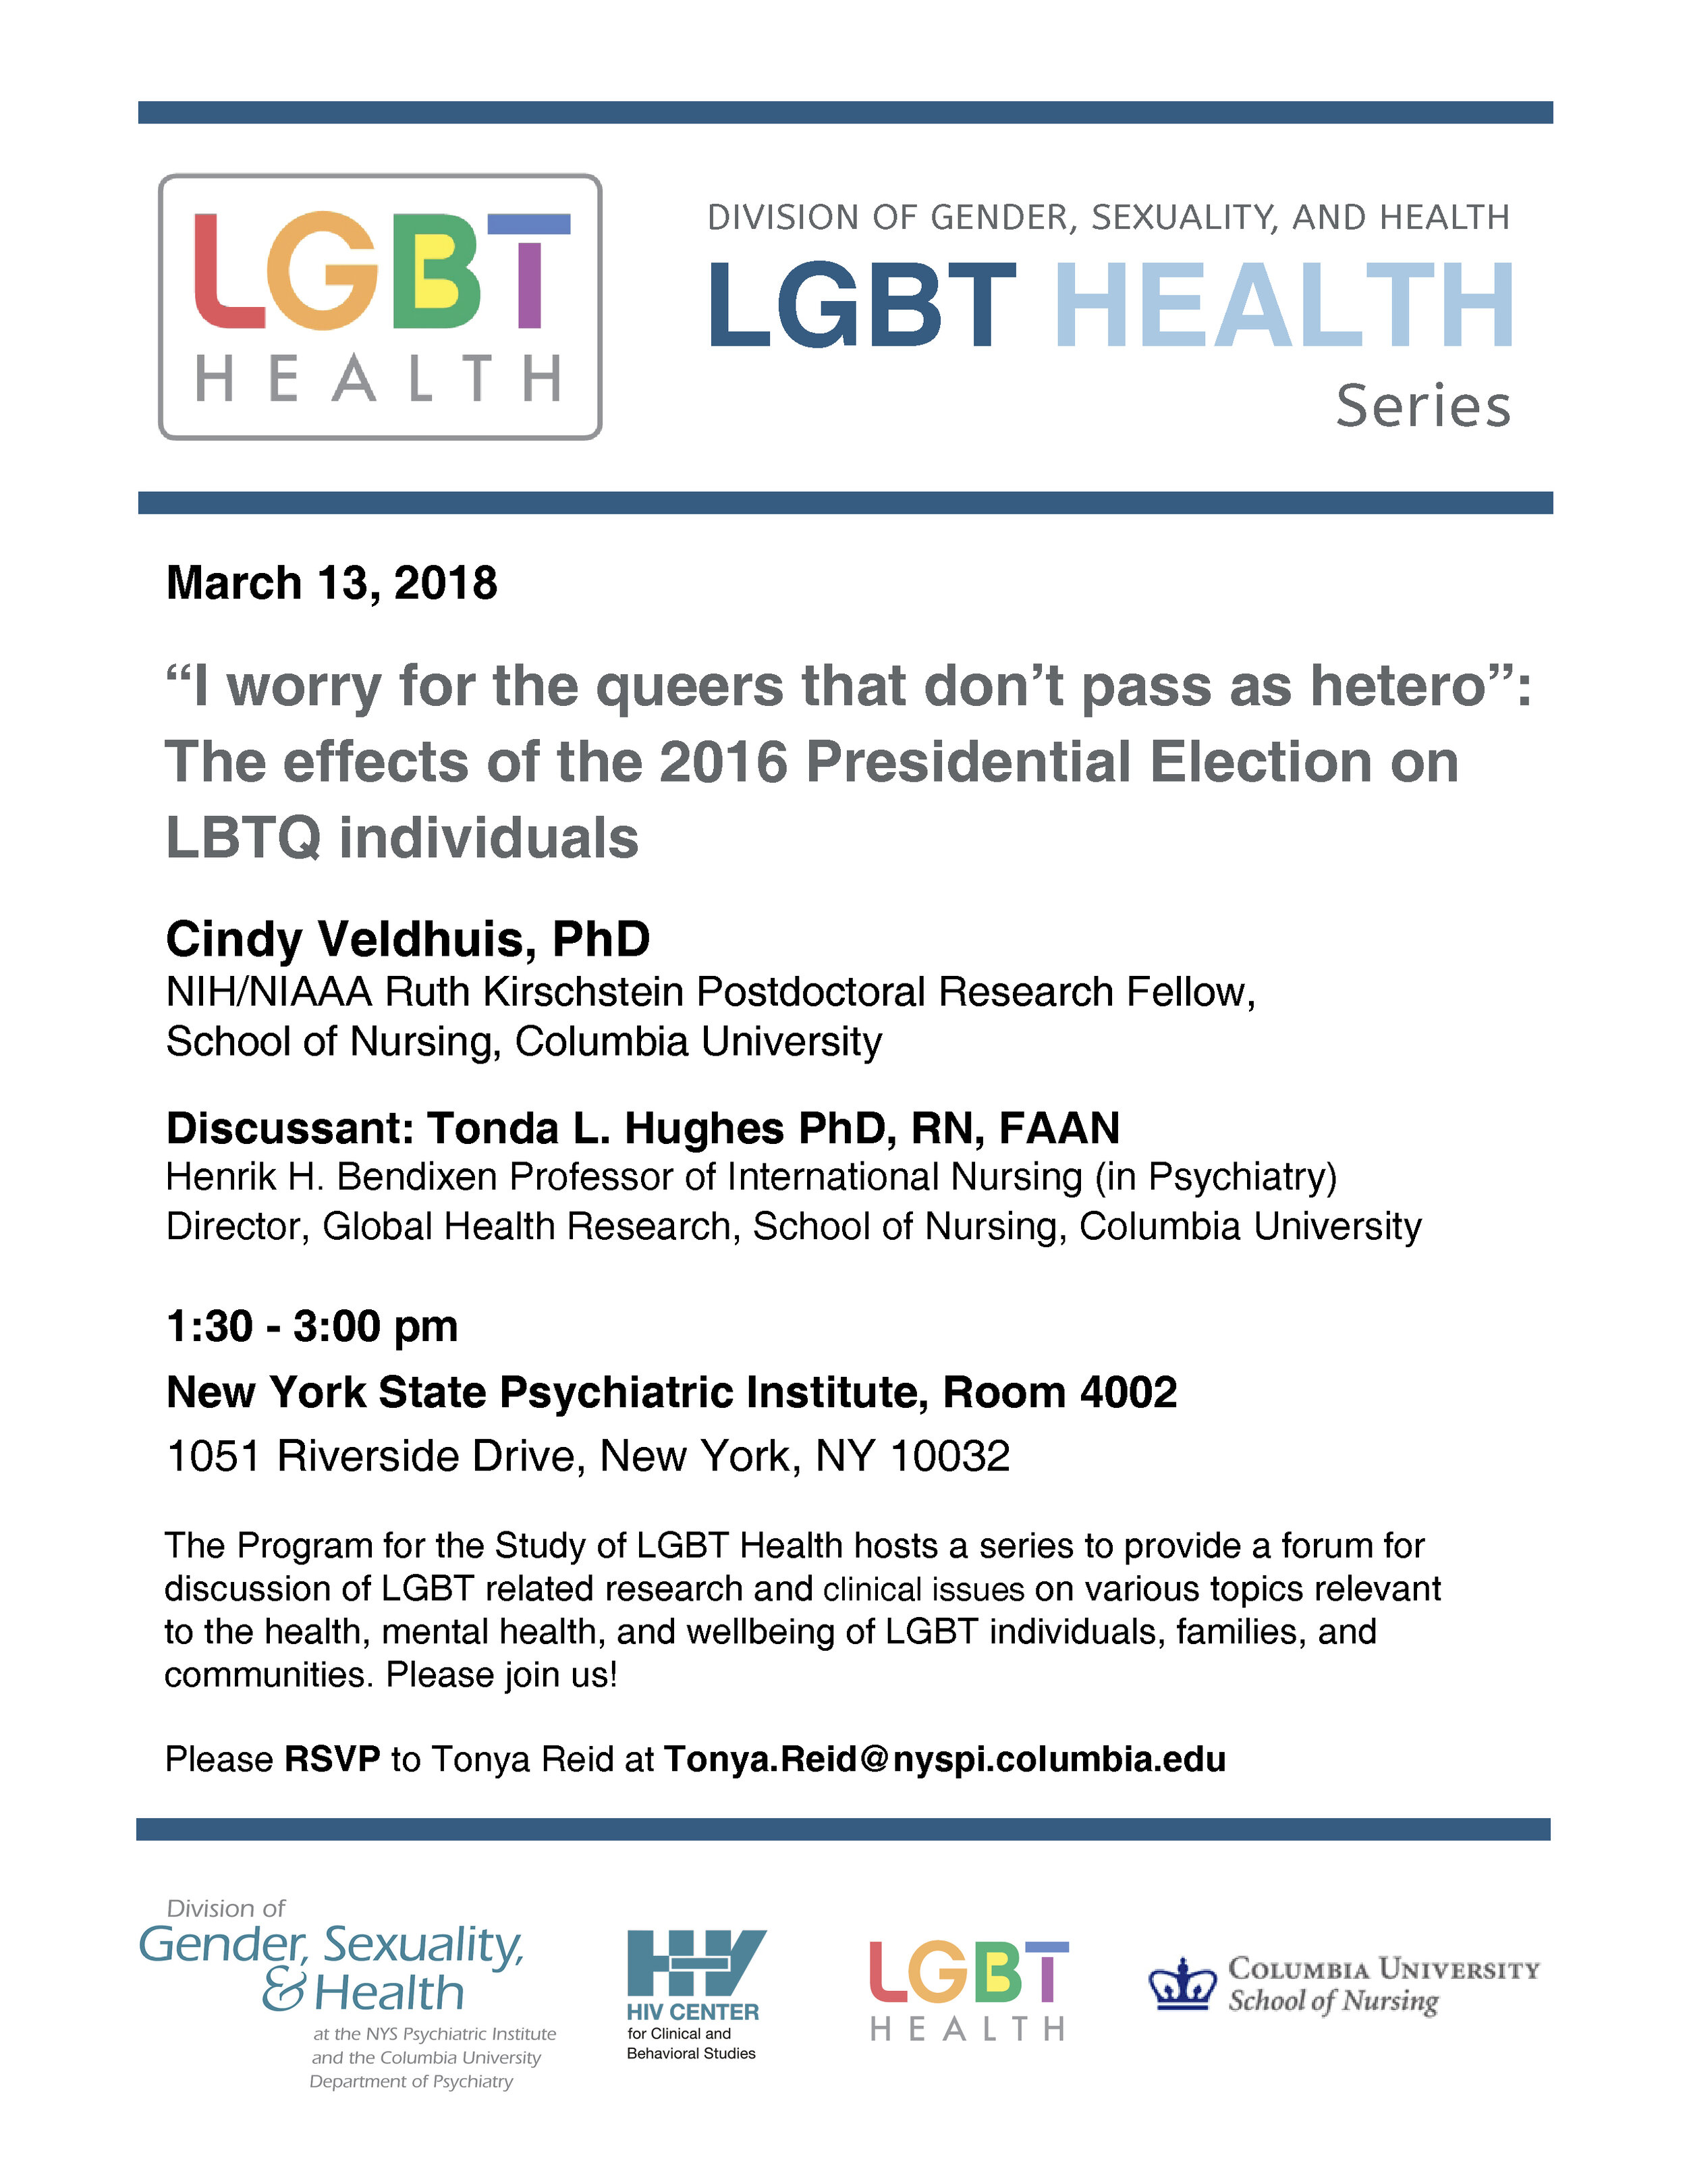 LGBT Health Series March 13 2018.jpg